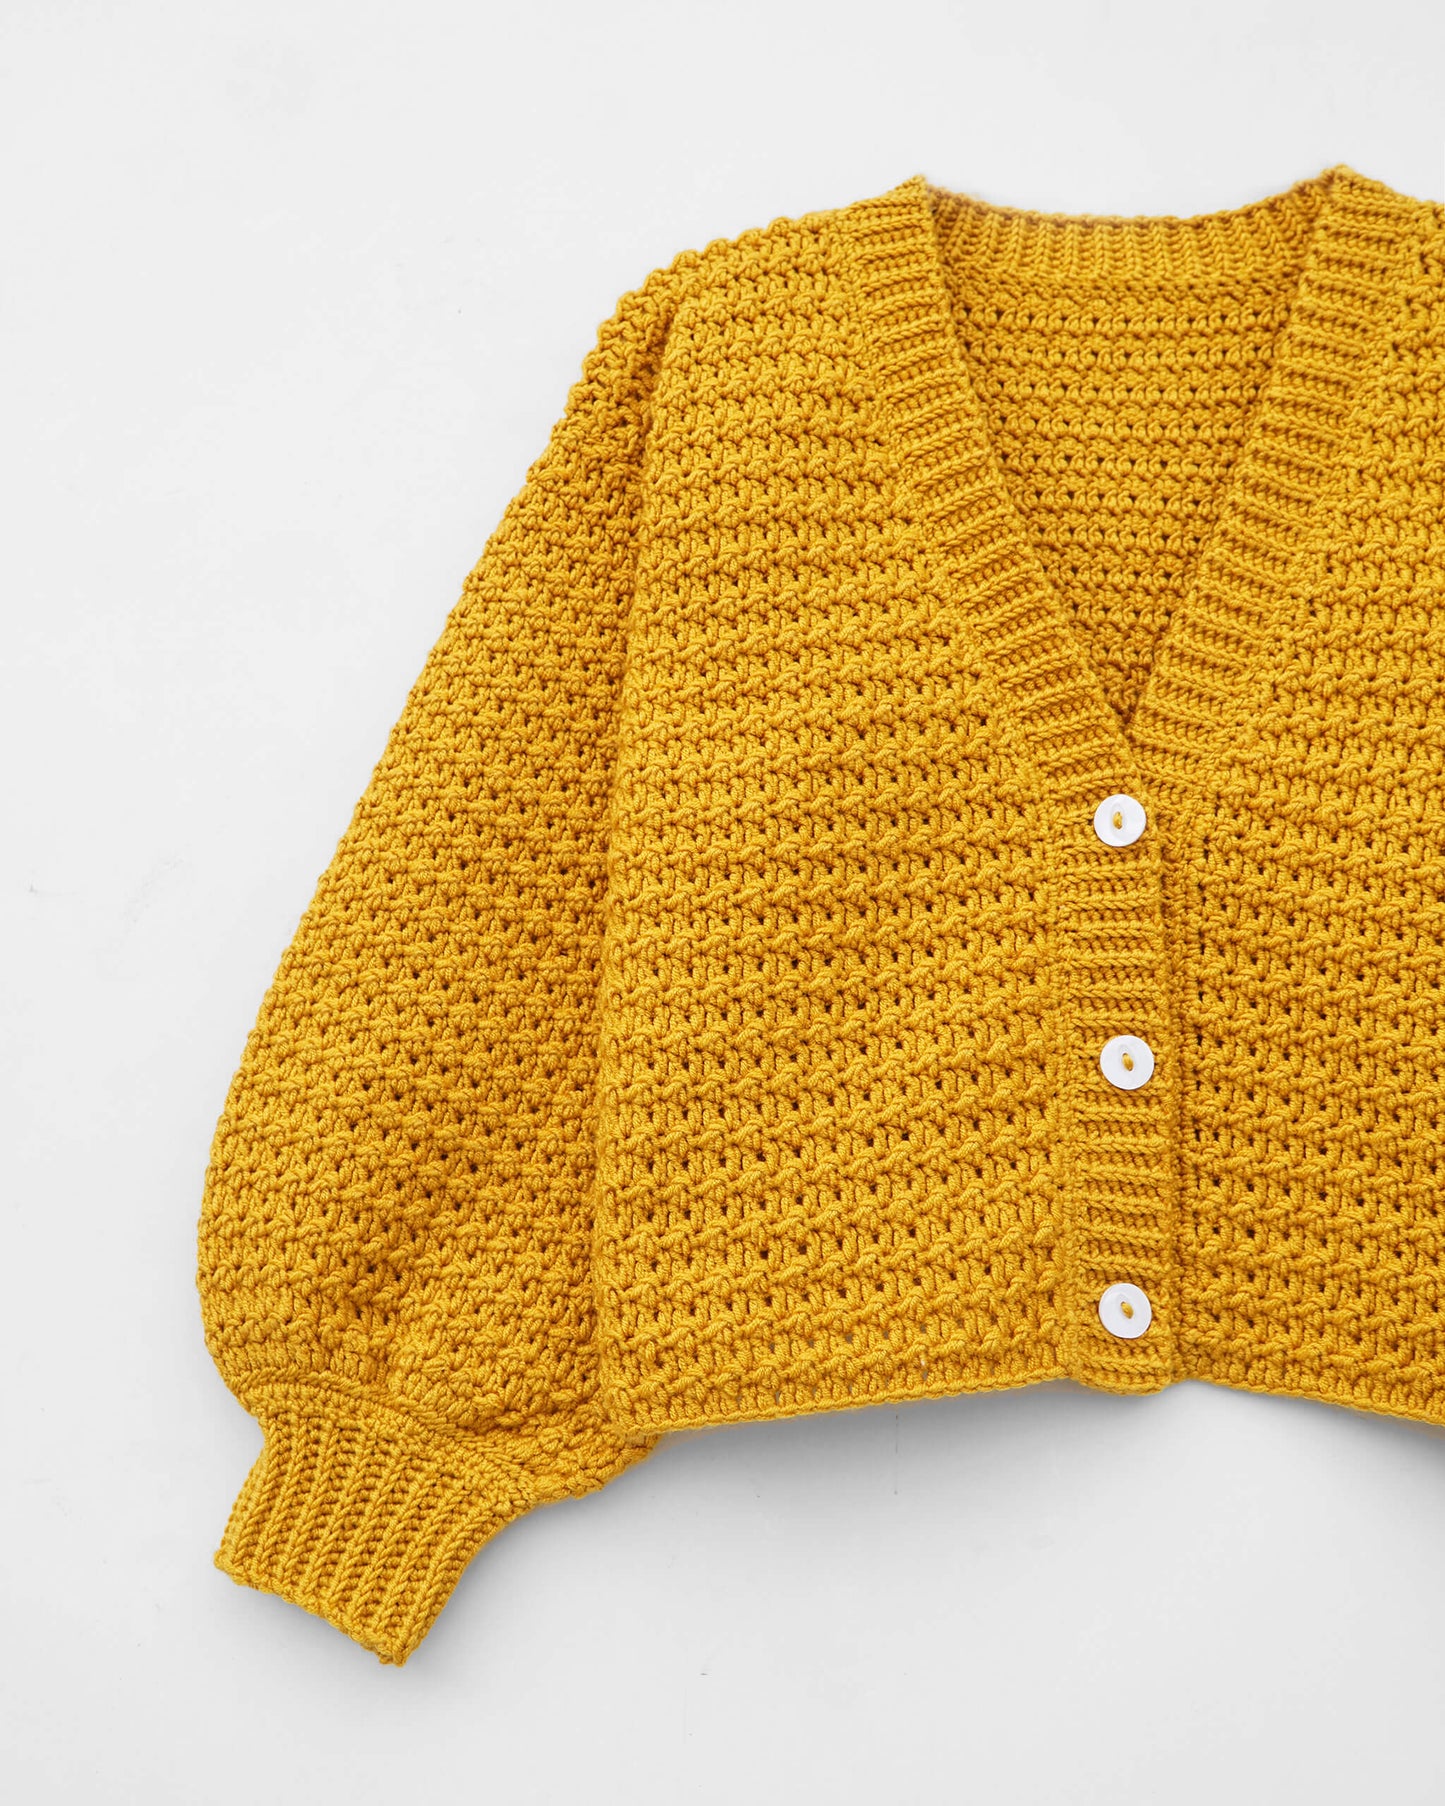 Cardigan No.29 | Crochet V-neck cardigan pattern